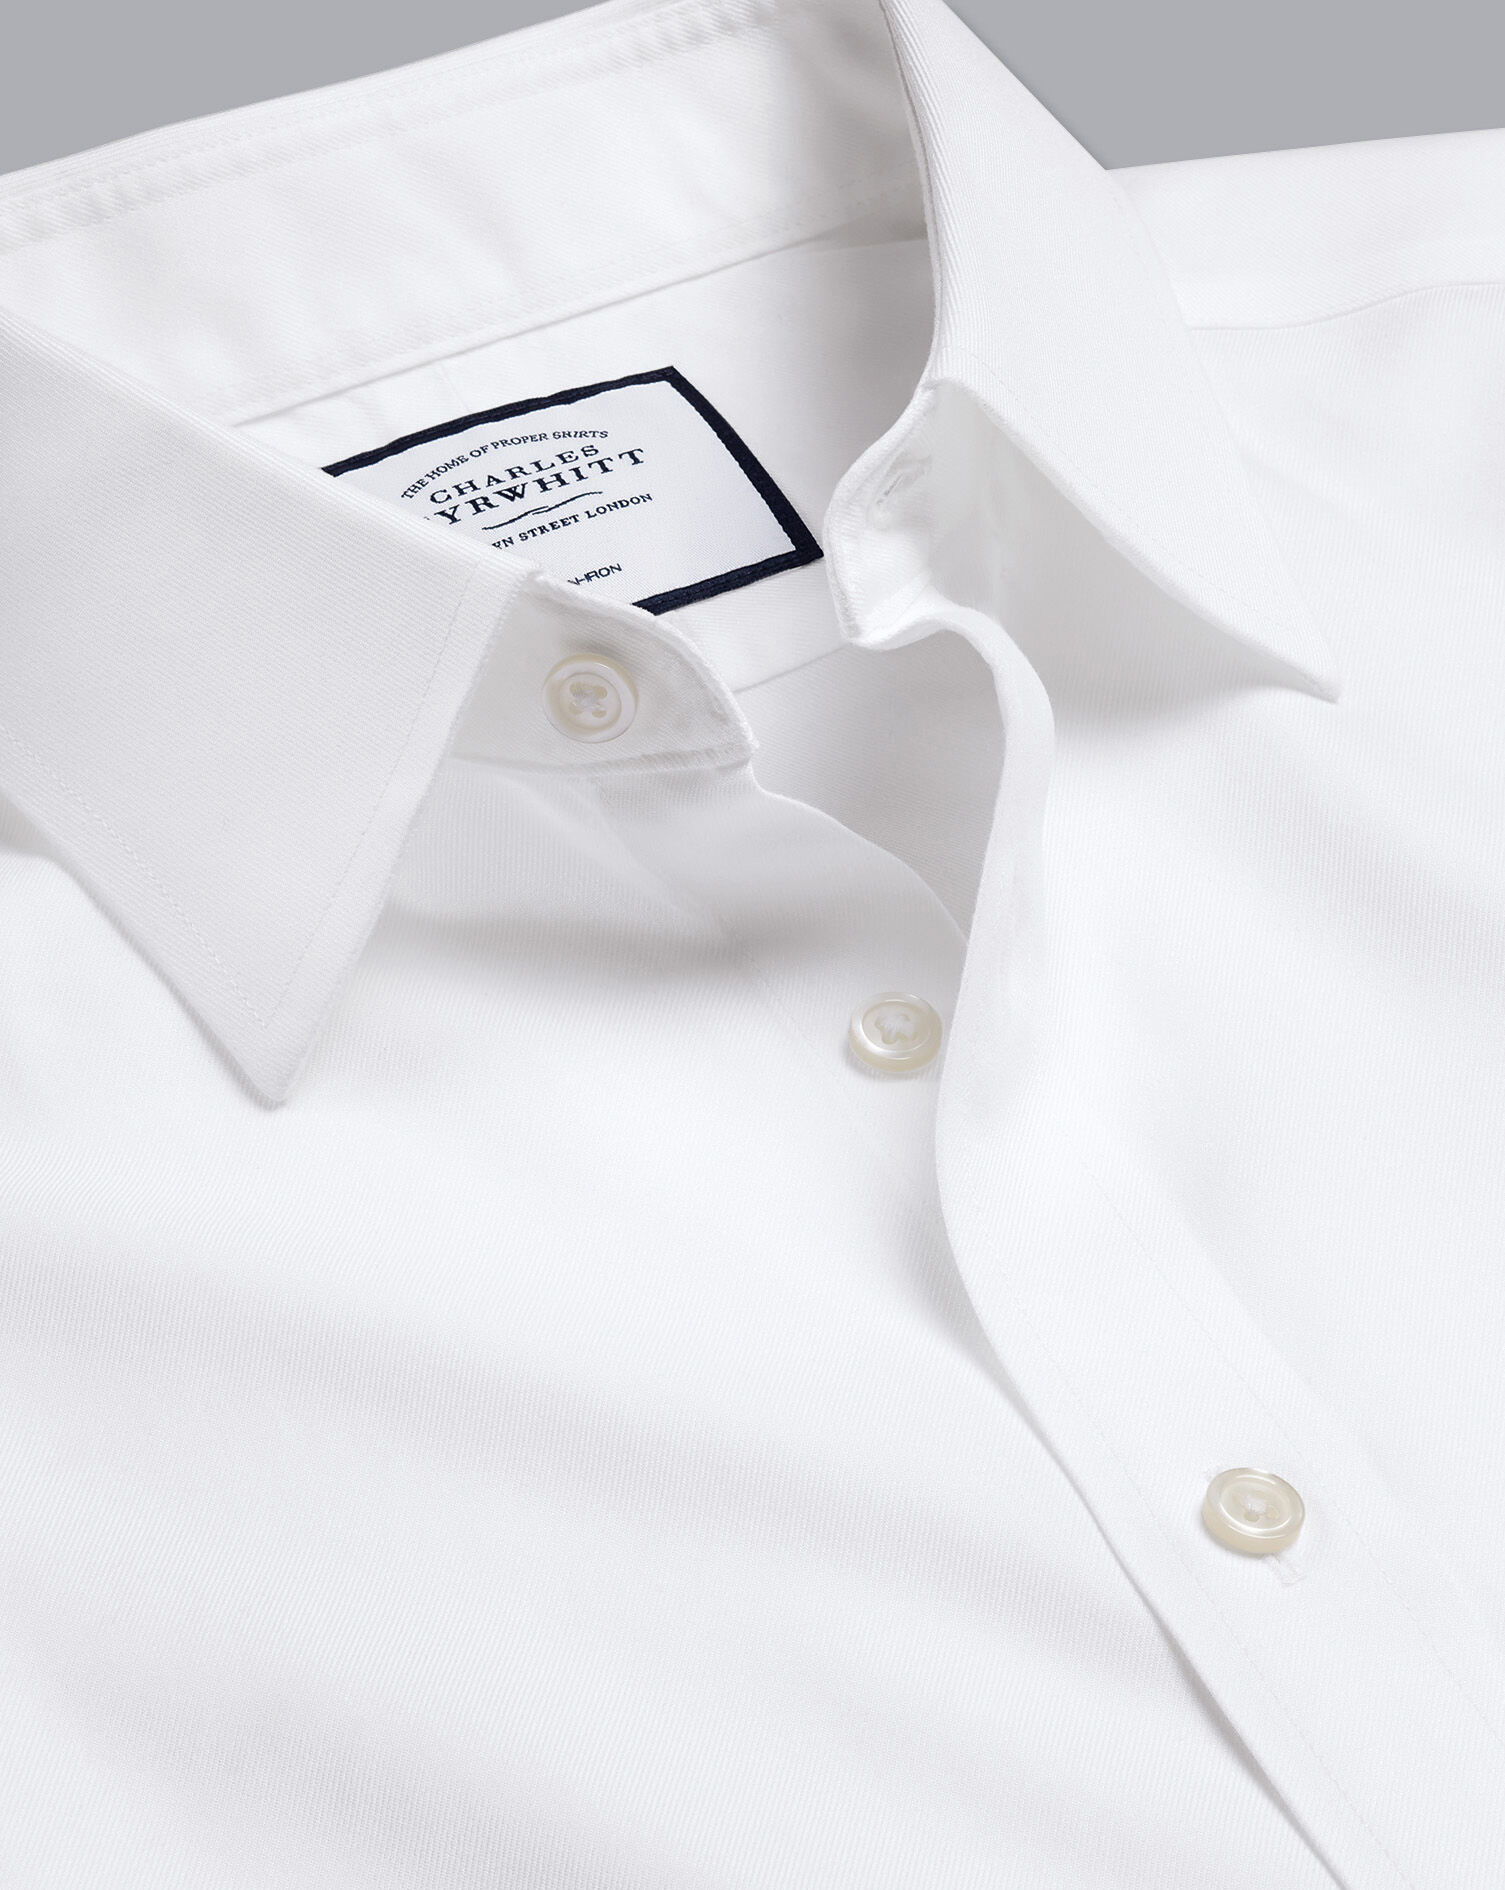 Charles Tyrwhitt Charles Tyrwhitt Shirt Size 16.5” Classic Fit Chest 42” Easy Iron Cotton check 